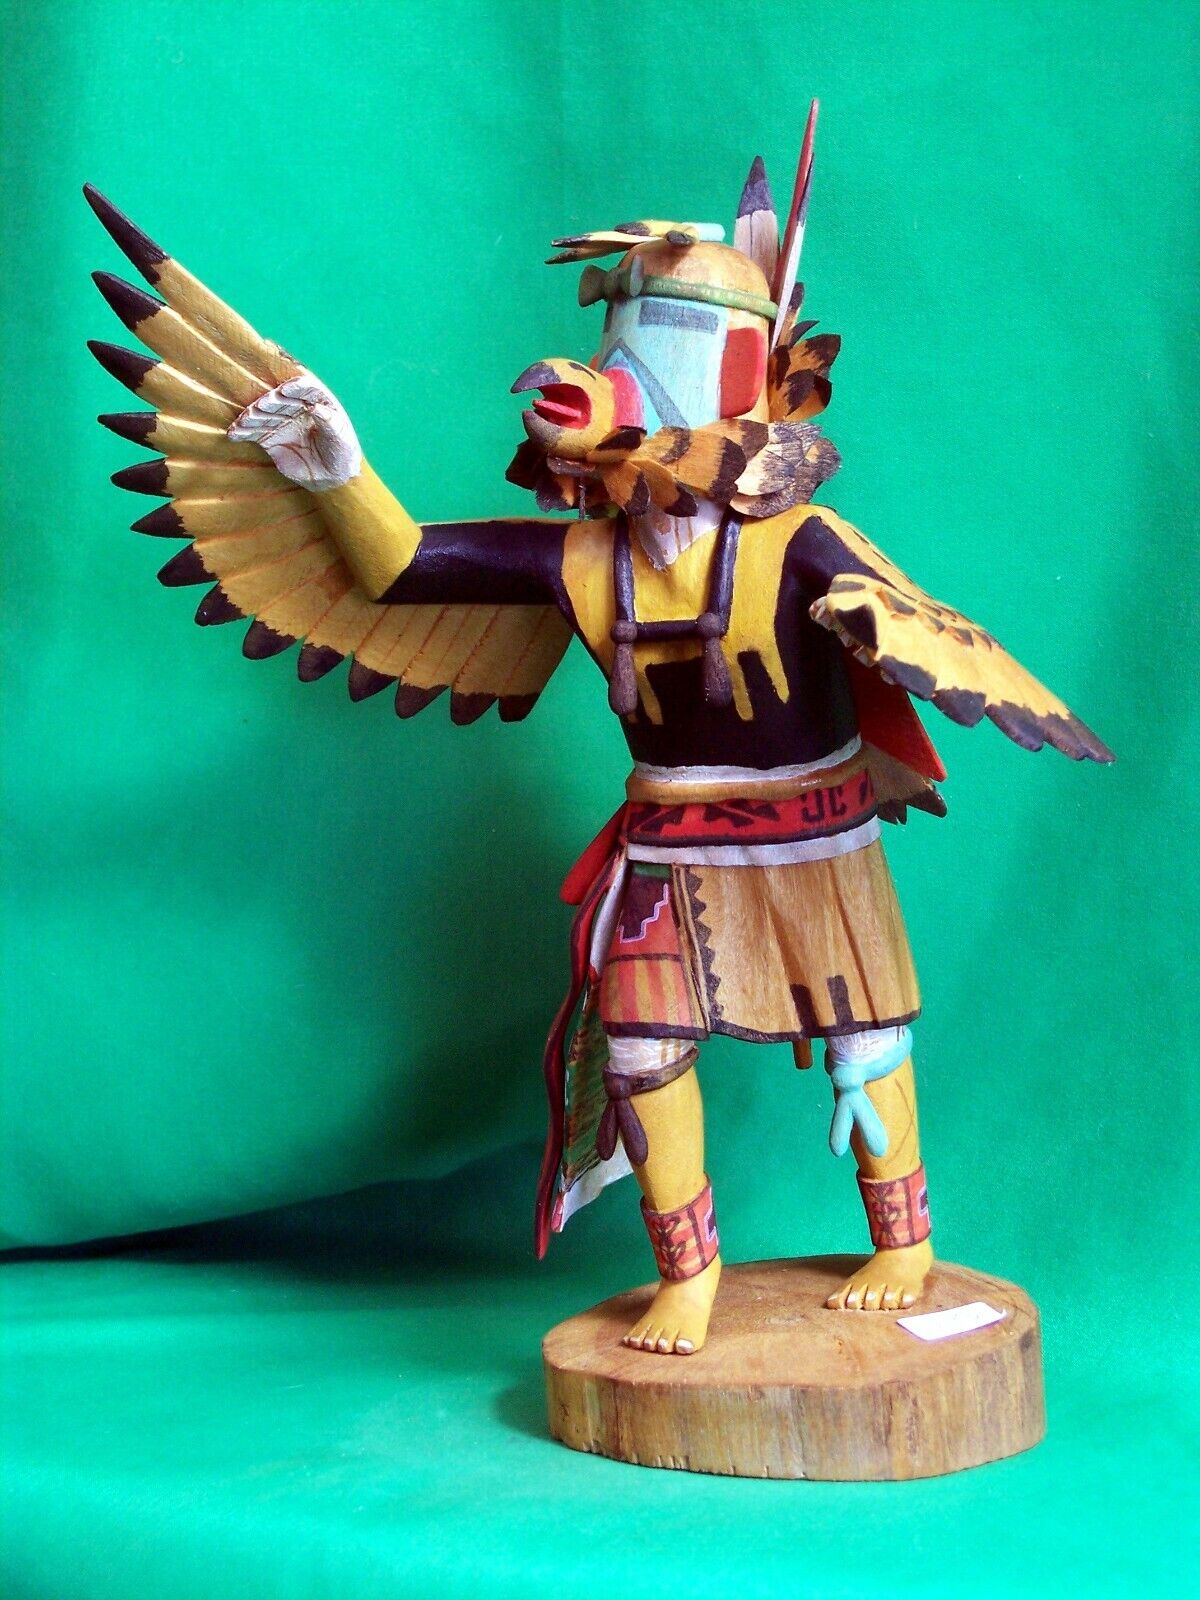 Hopi Kachina Doll - Kwahu, the Eagle Dancer by Joseph Duwyenie - Incredible